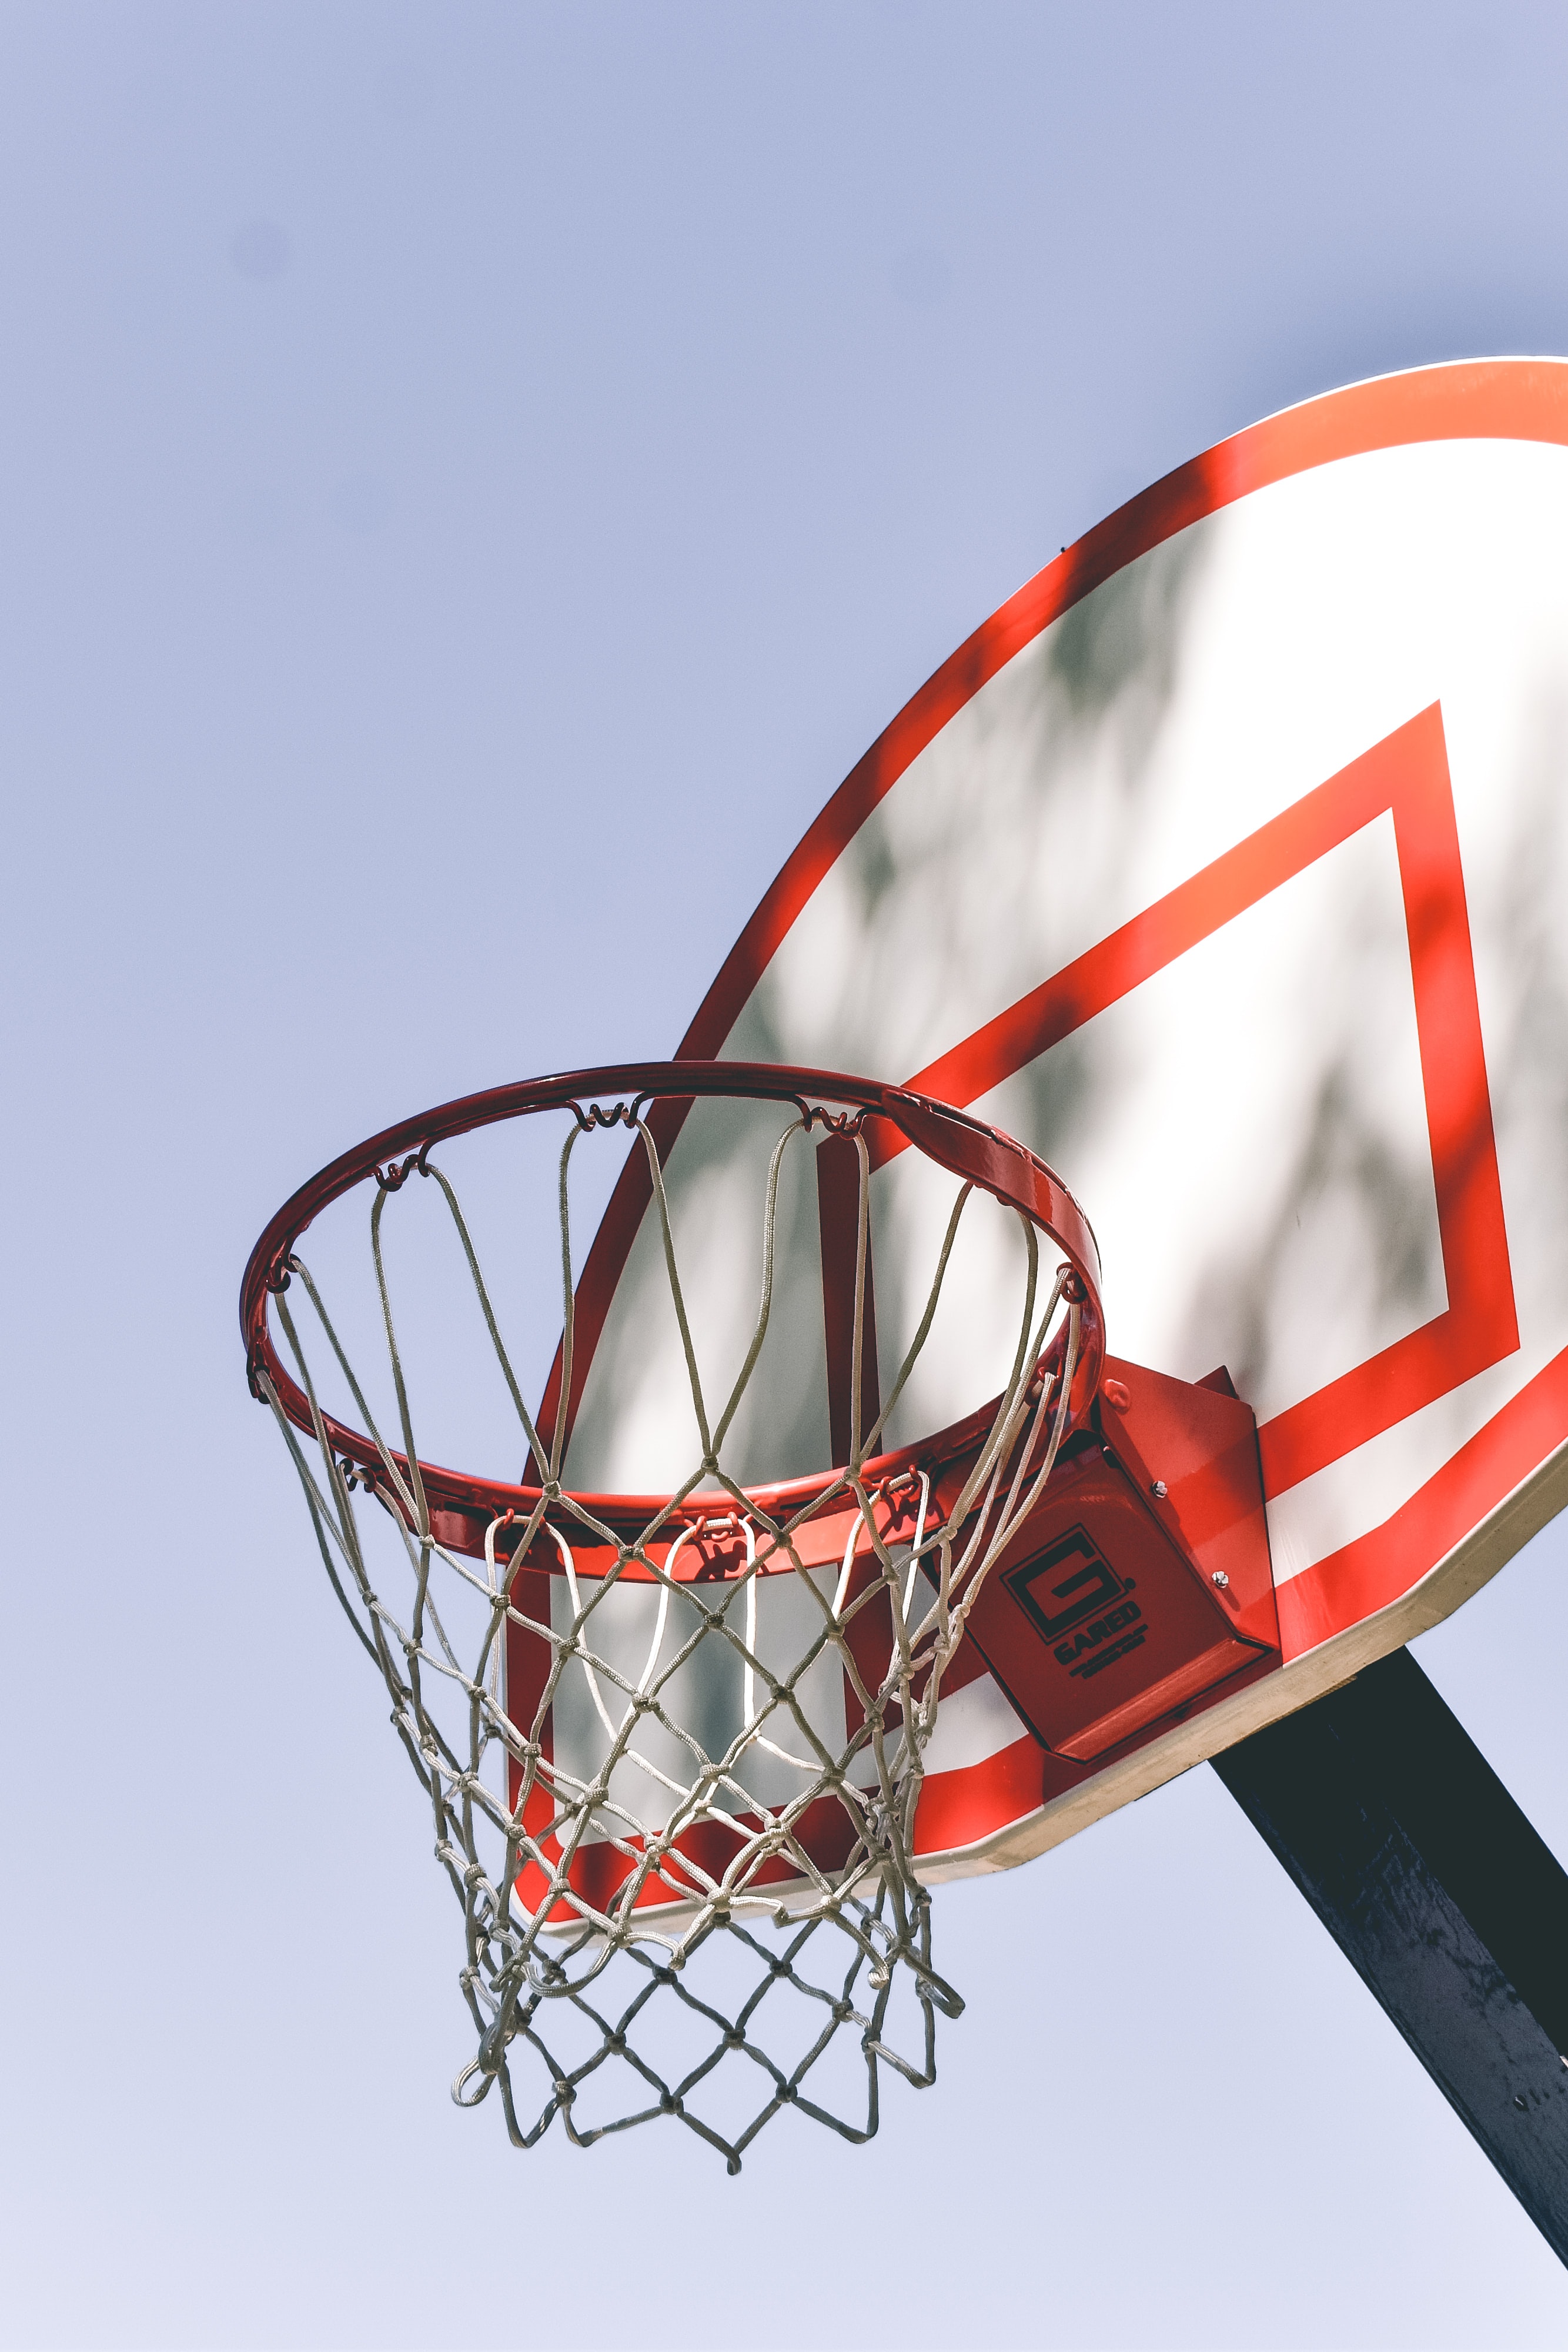 basketball hoop, basketball ring, basketball, miscellanea, miscellaneous, shield, metal, metallic, basketball net, basketball grid